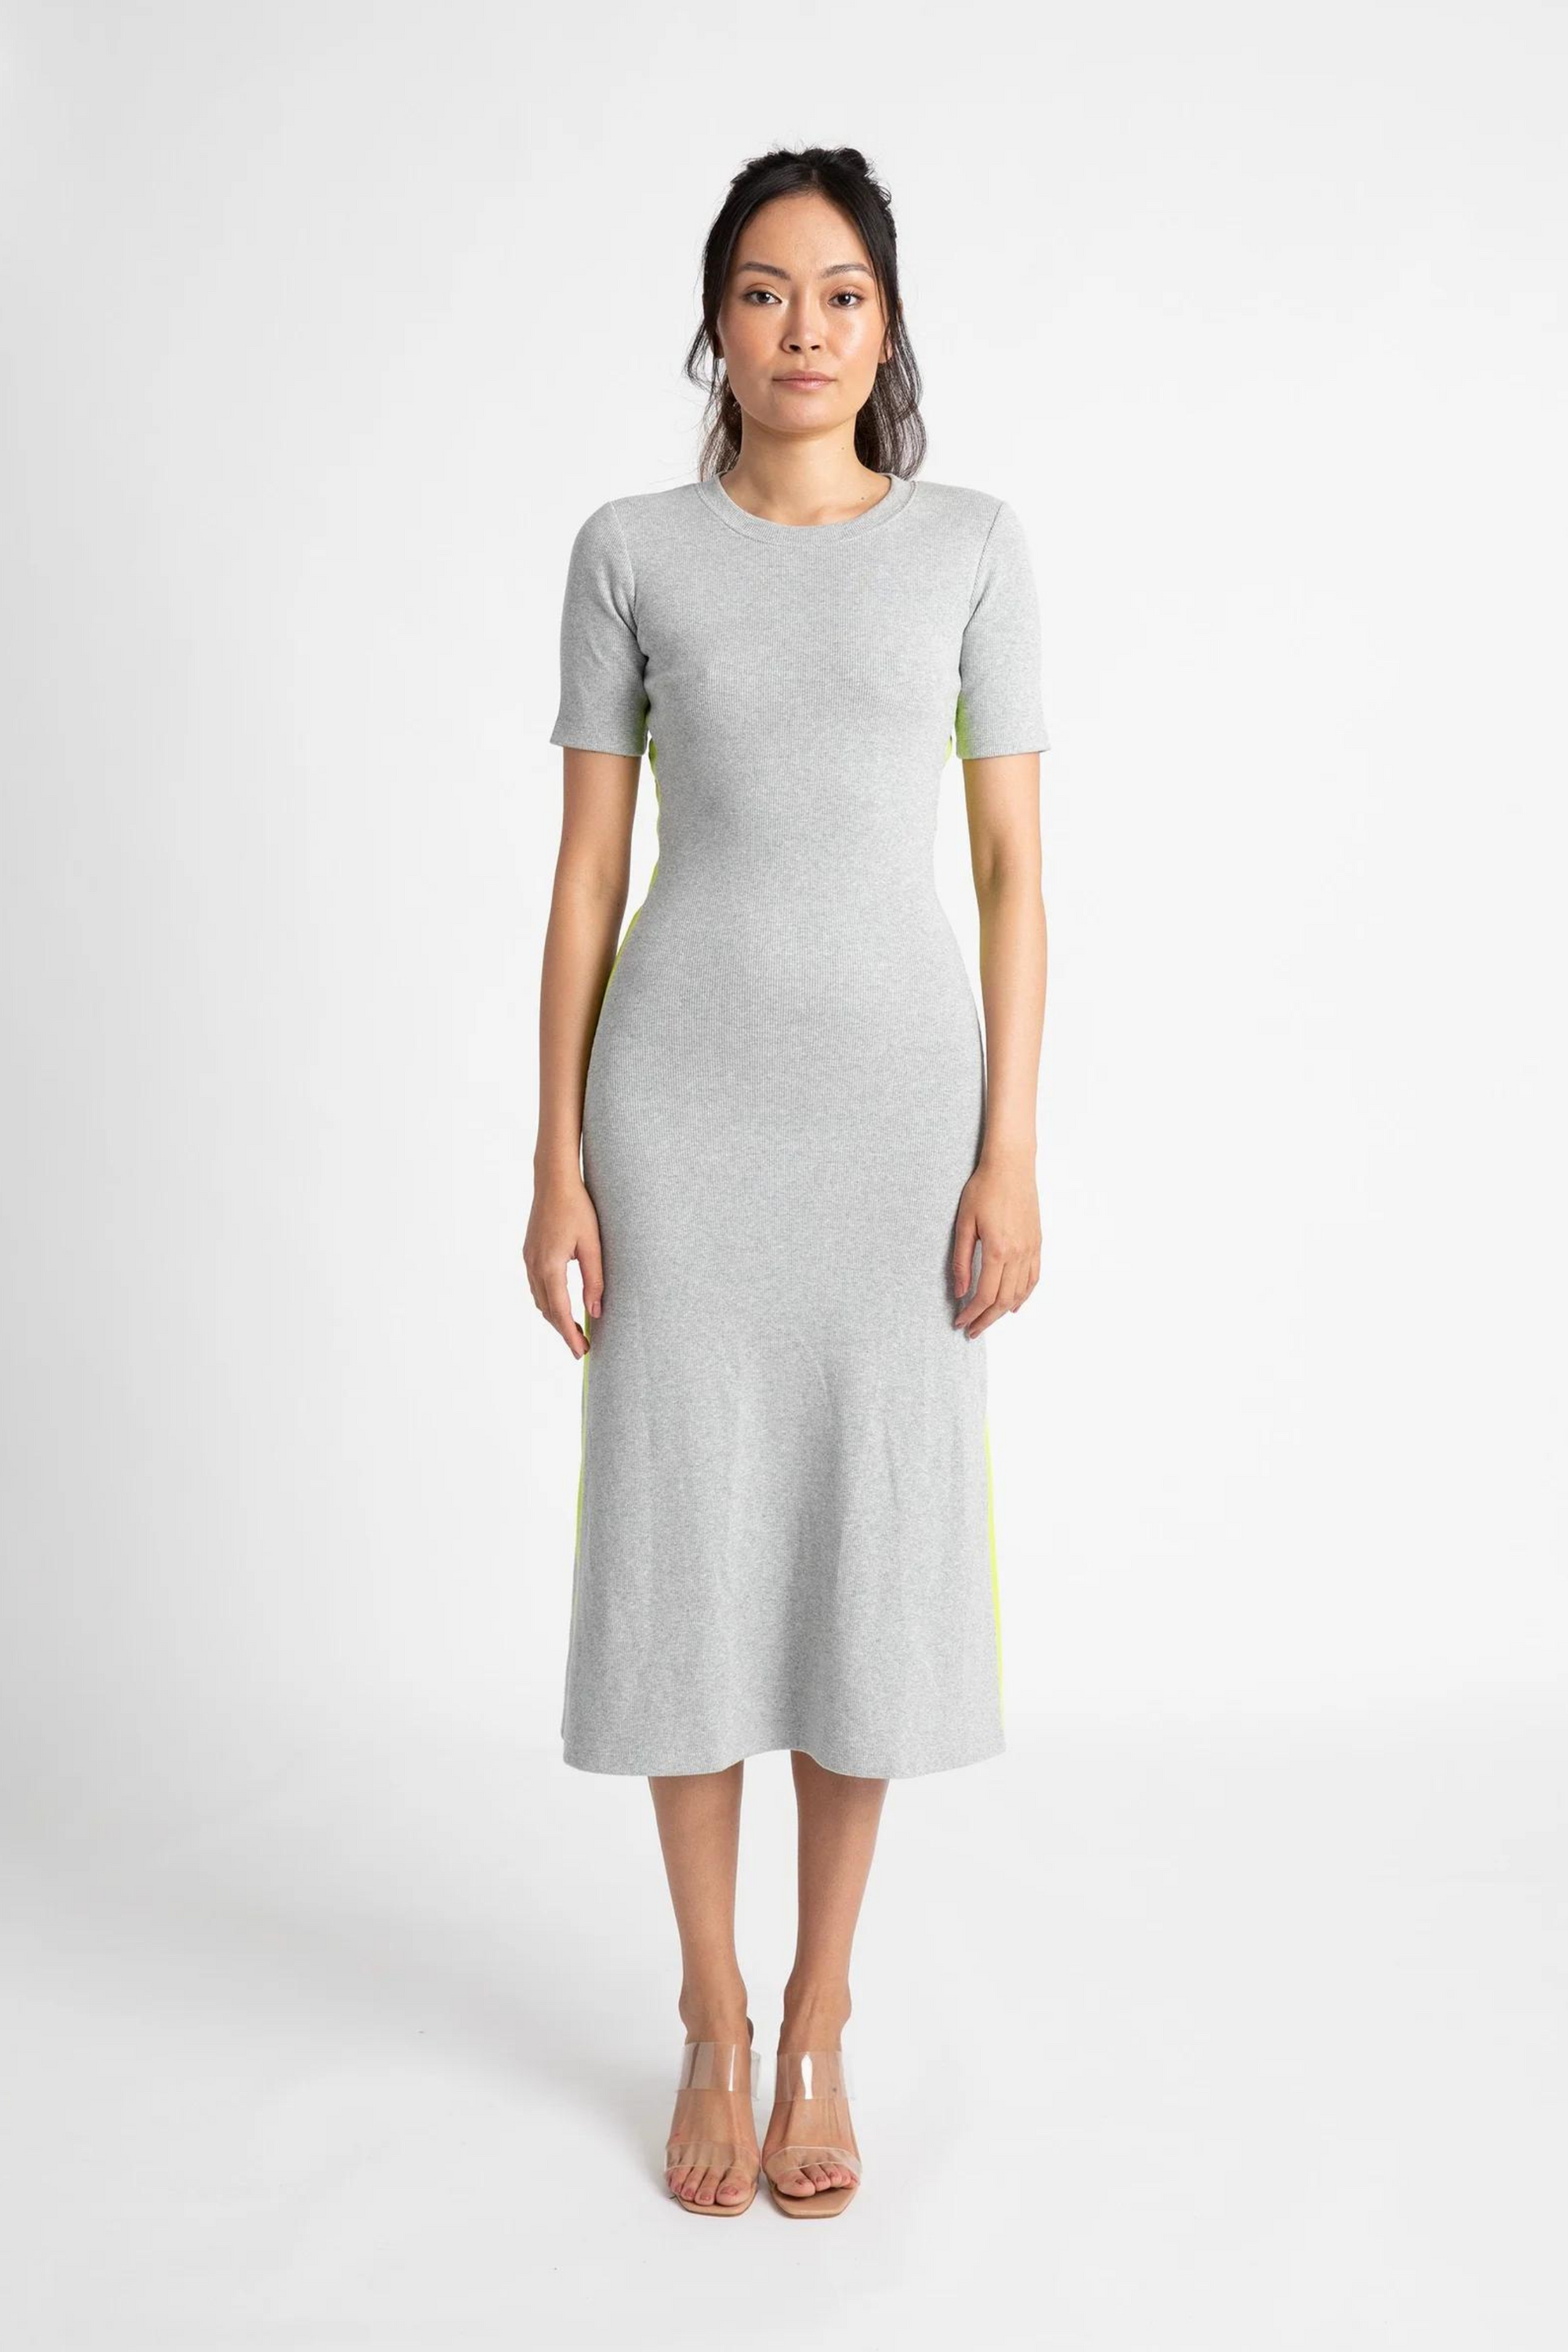 Midi A Line Dress With Short Sleeve Grey / Apple Stripe